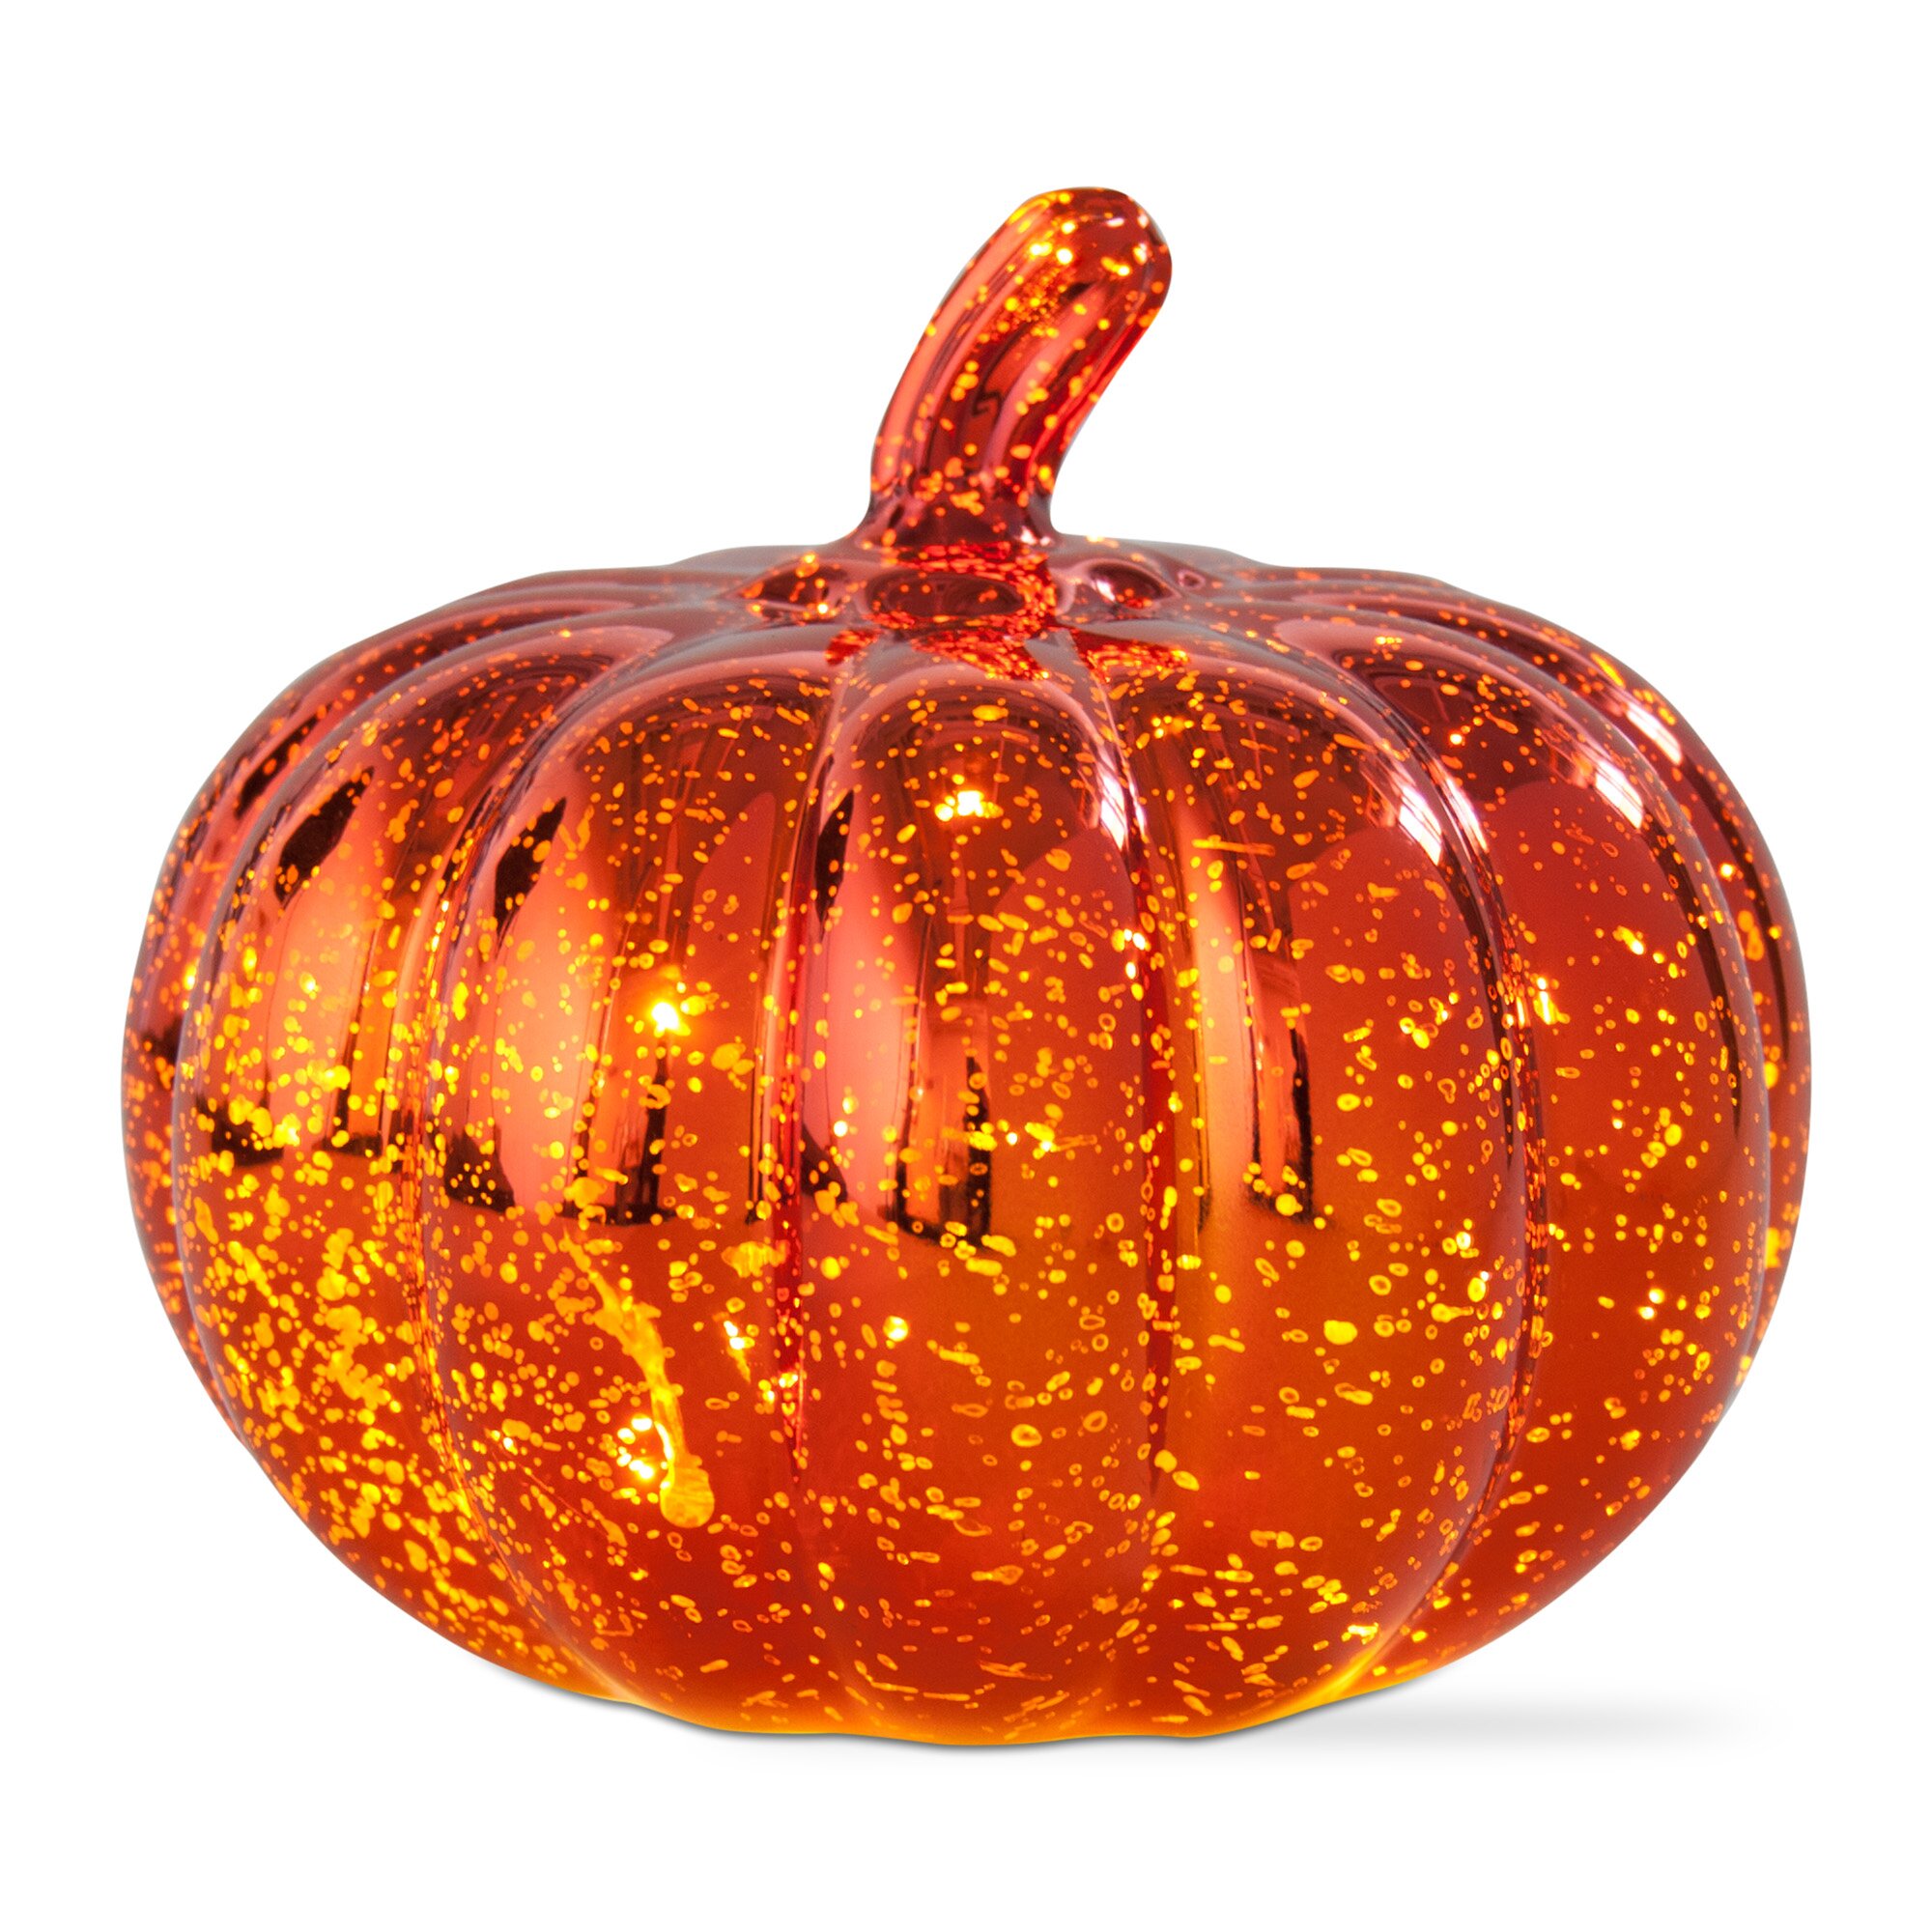 TAG Halloween LED Mercury Glass Pumpkin & Reviews | Wayfair